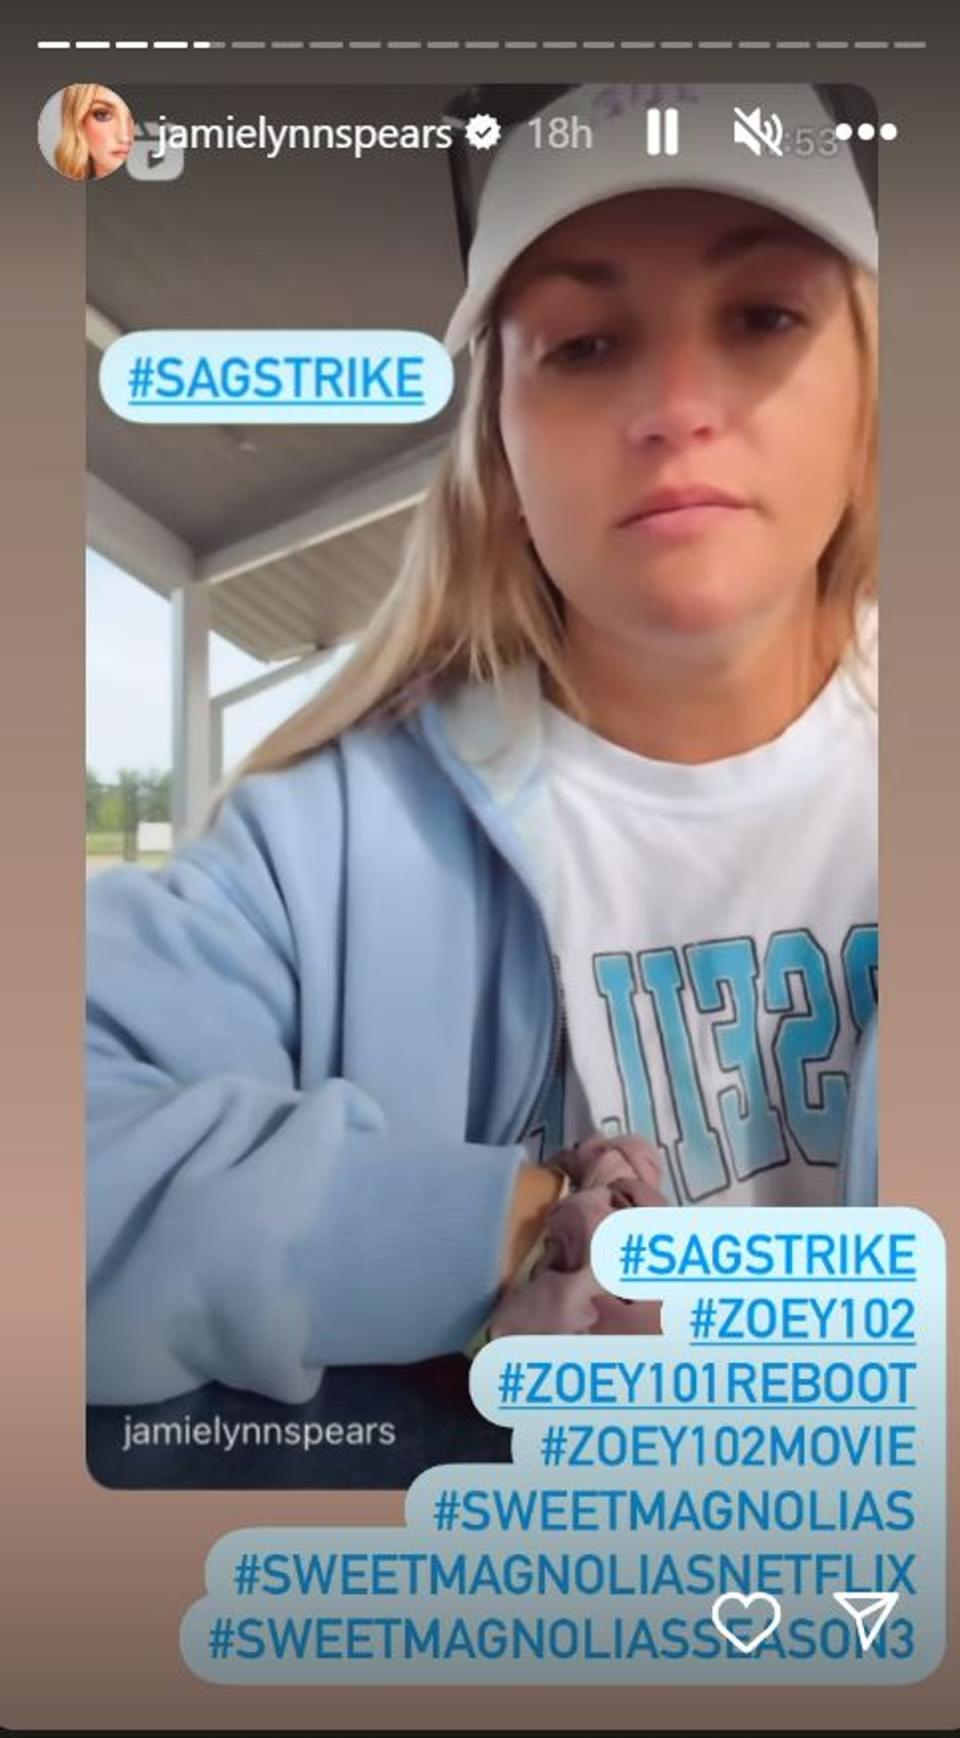 Jamie Lynn Spears has shared her support for the strike online (Instagram @jamielynnspears)